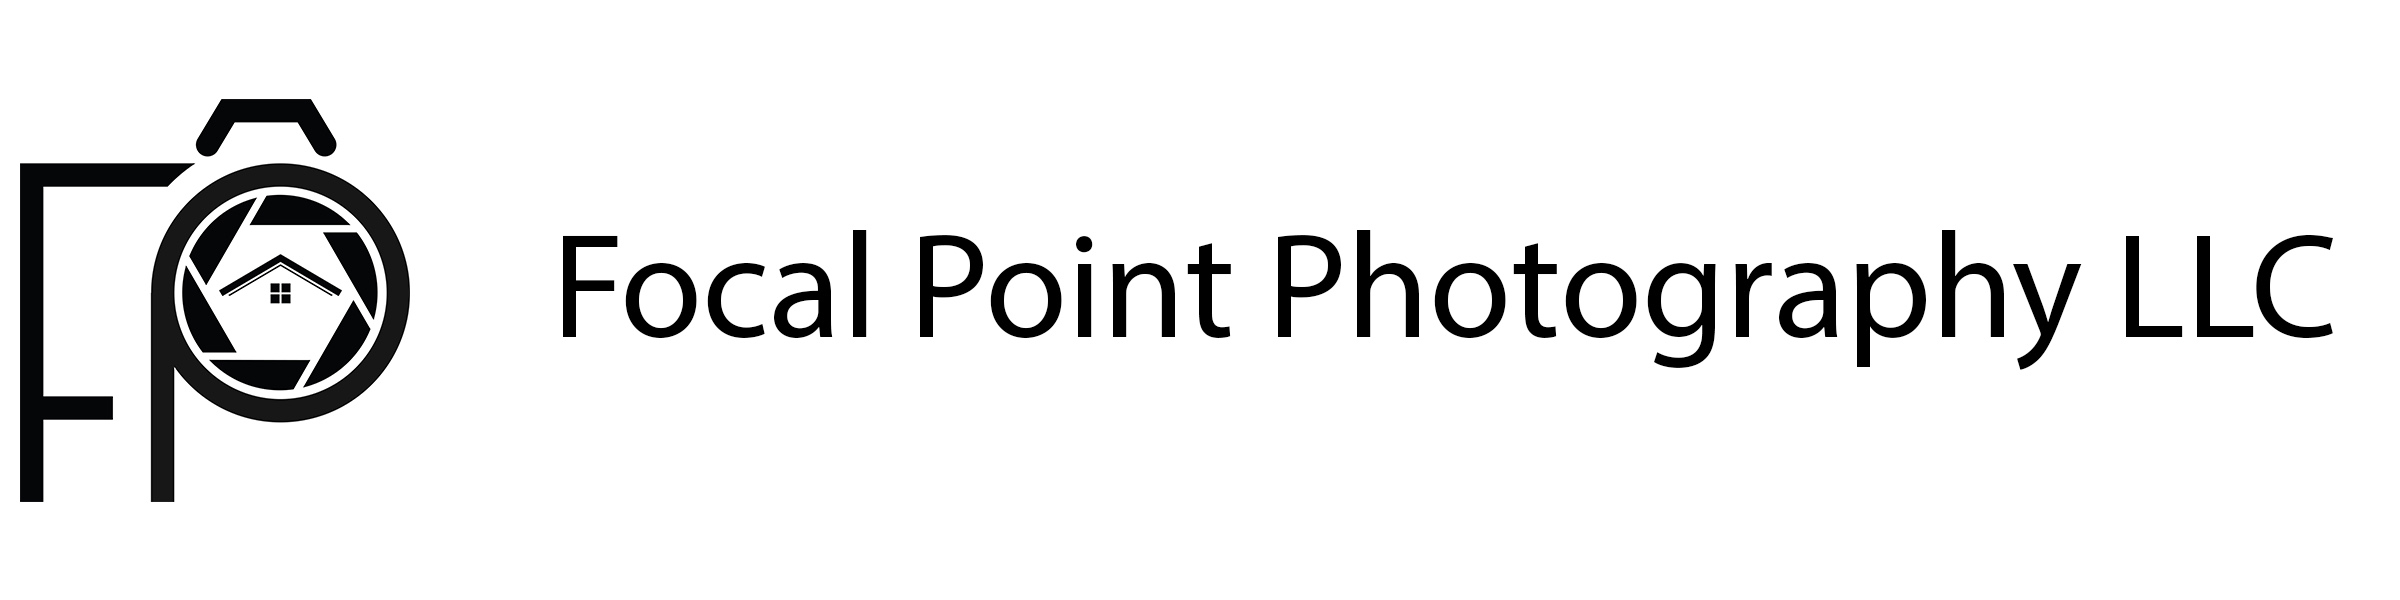 Focal Point Photography LLC